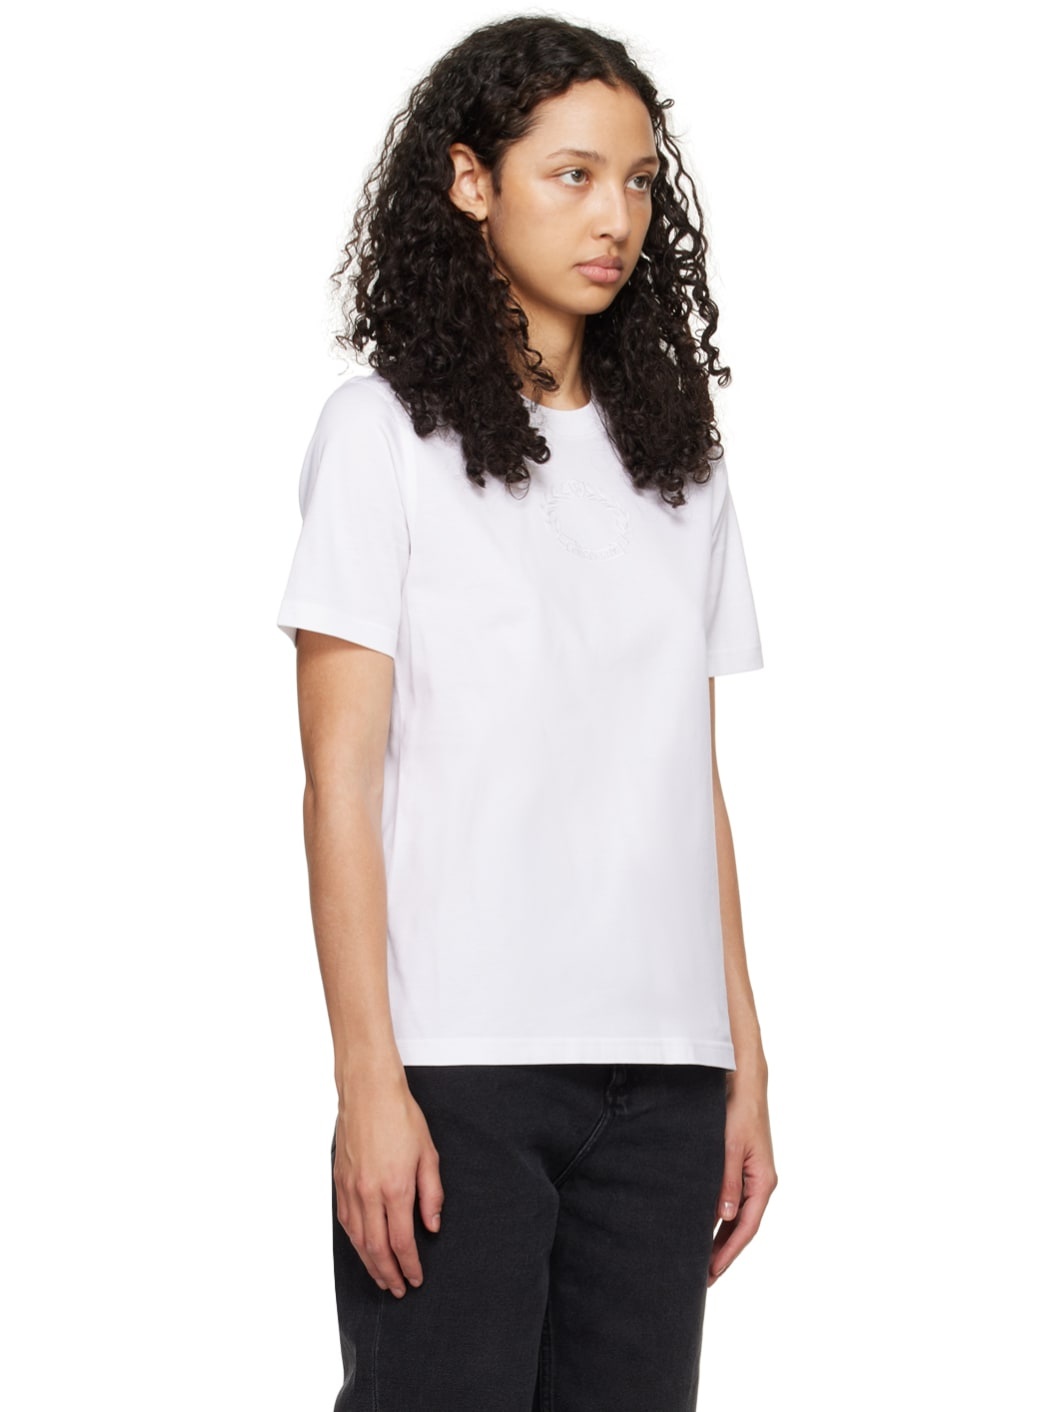 White Oak Leaf Crest T-Shirt - 2